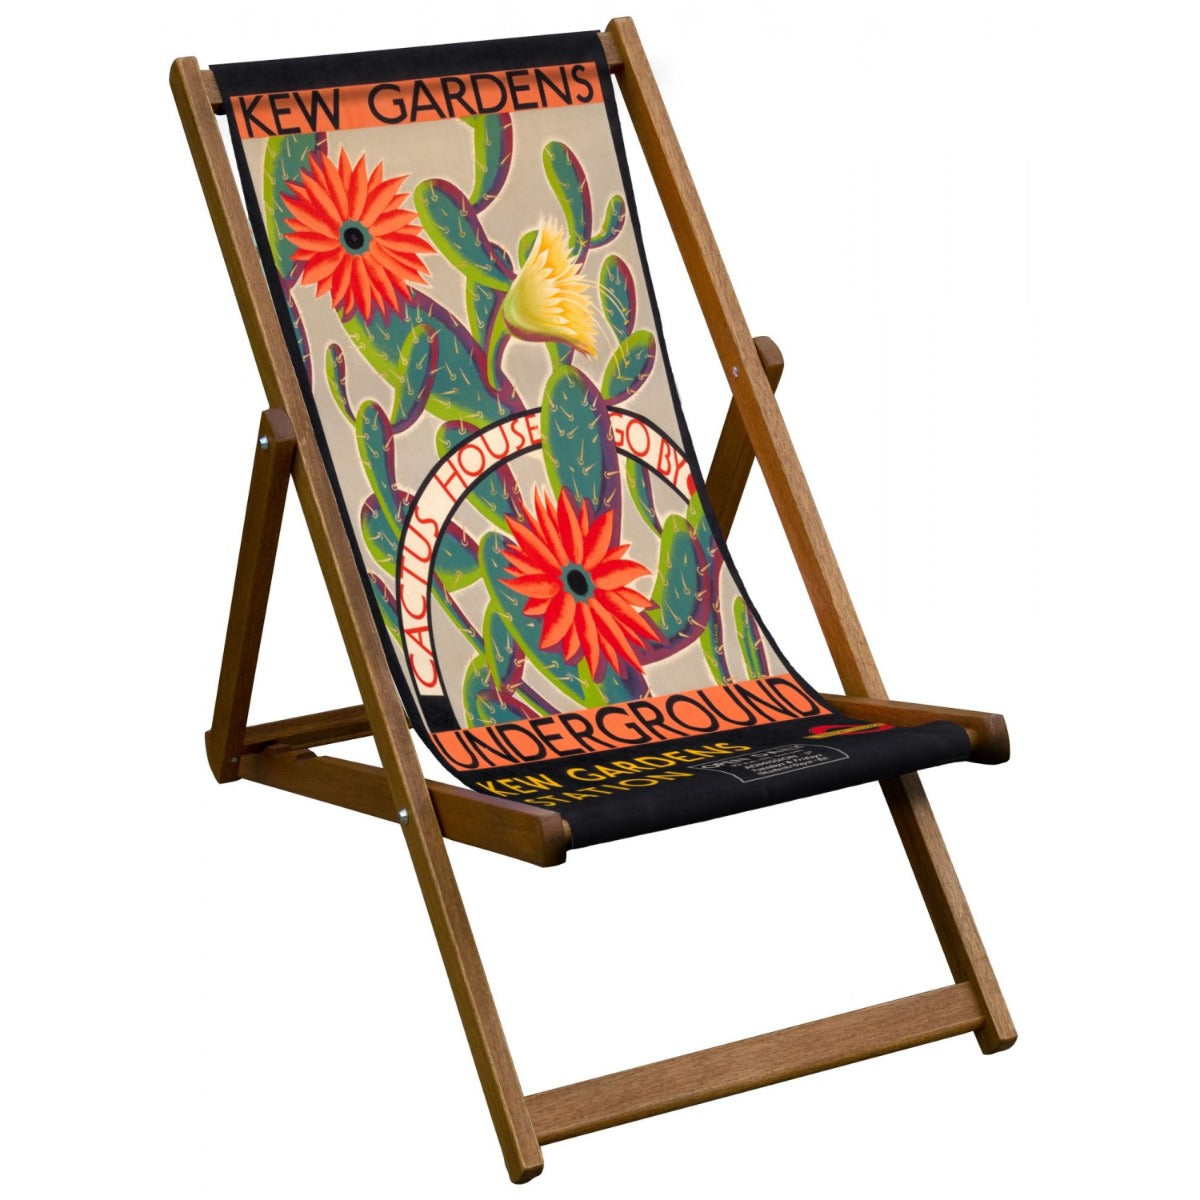 Vintage Inspired Wooden Deckchair- Kew Gardens Cactus - London Transport Poster